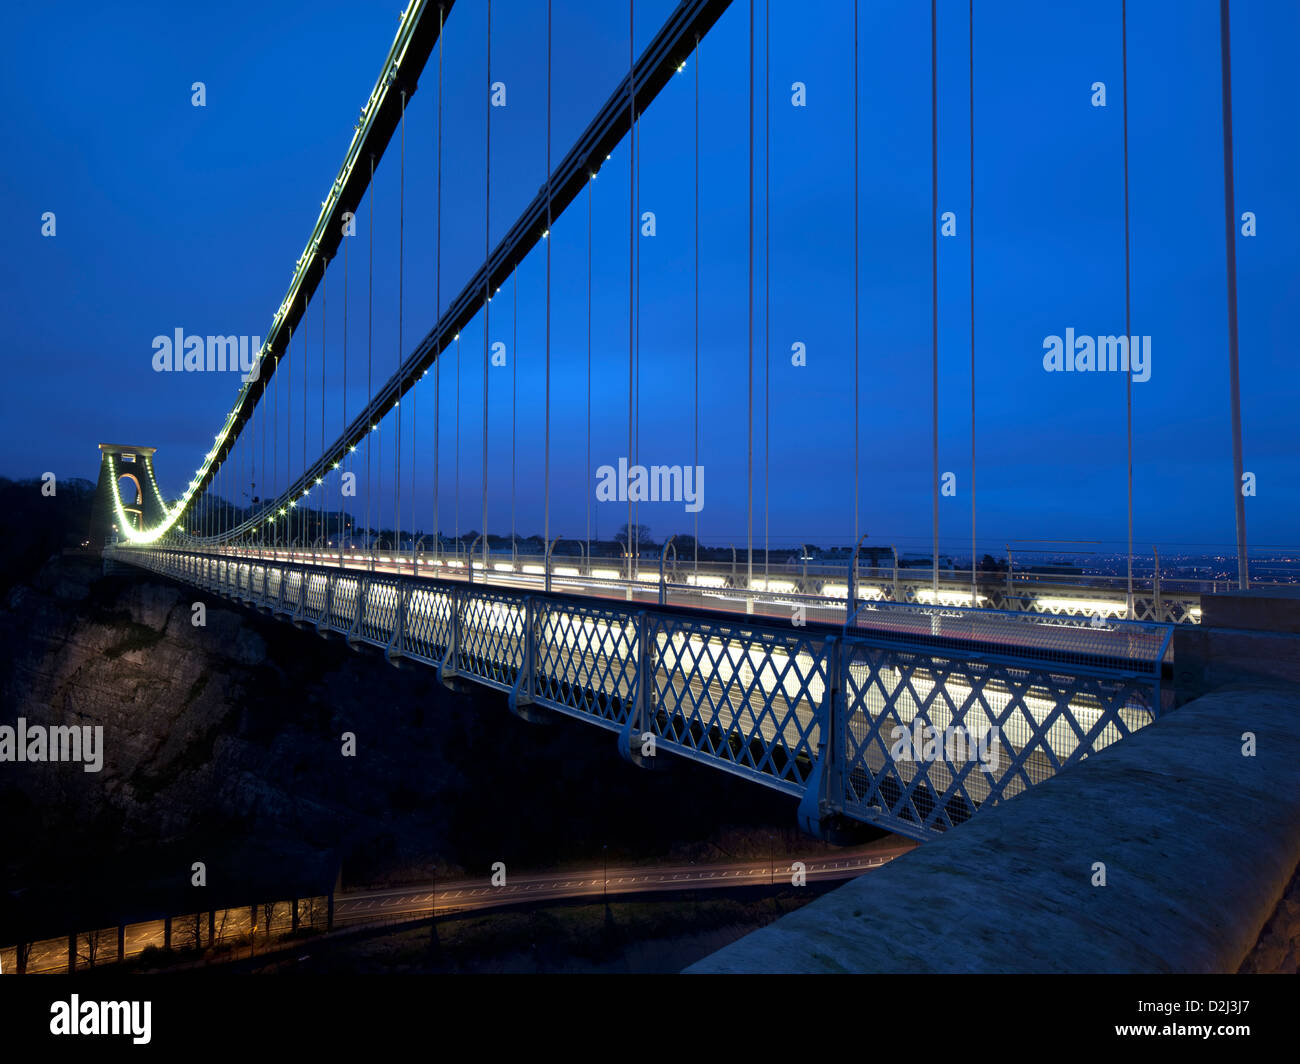 Clifton Suspension Bridge at night, Bristol, Avon, England, UK Banque D'Images